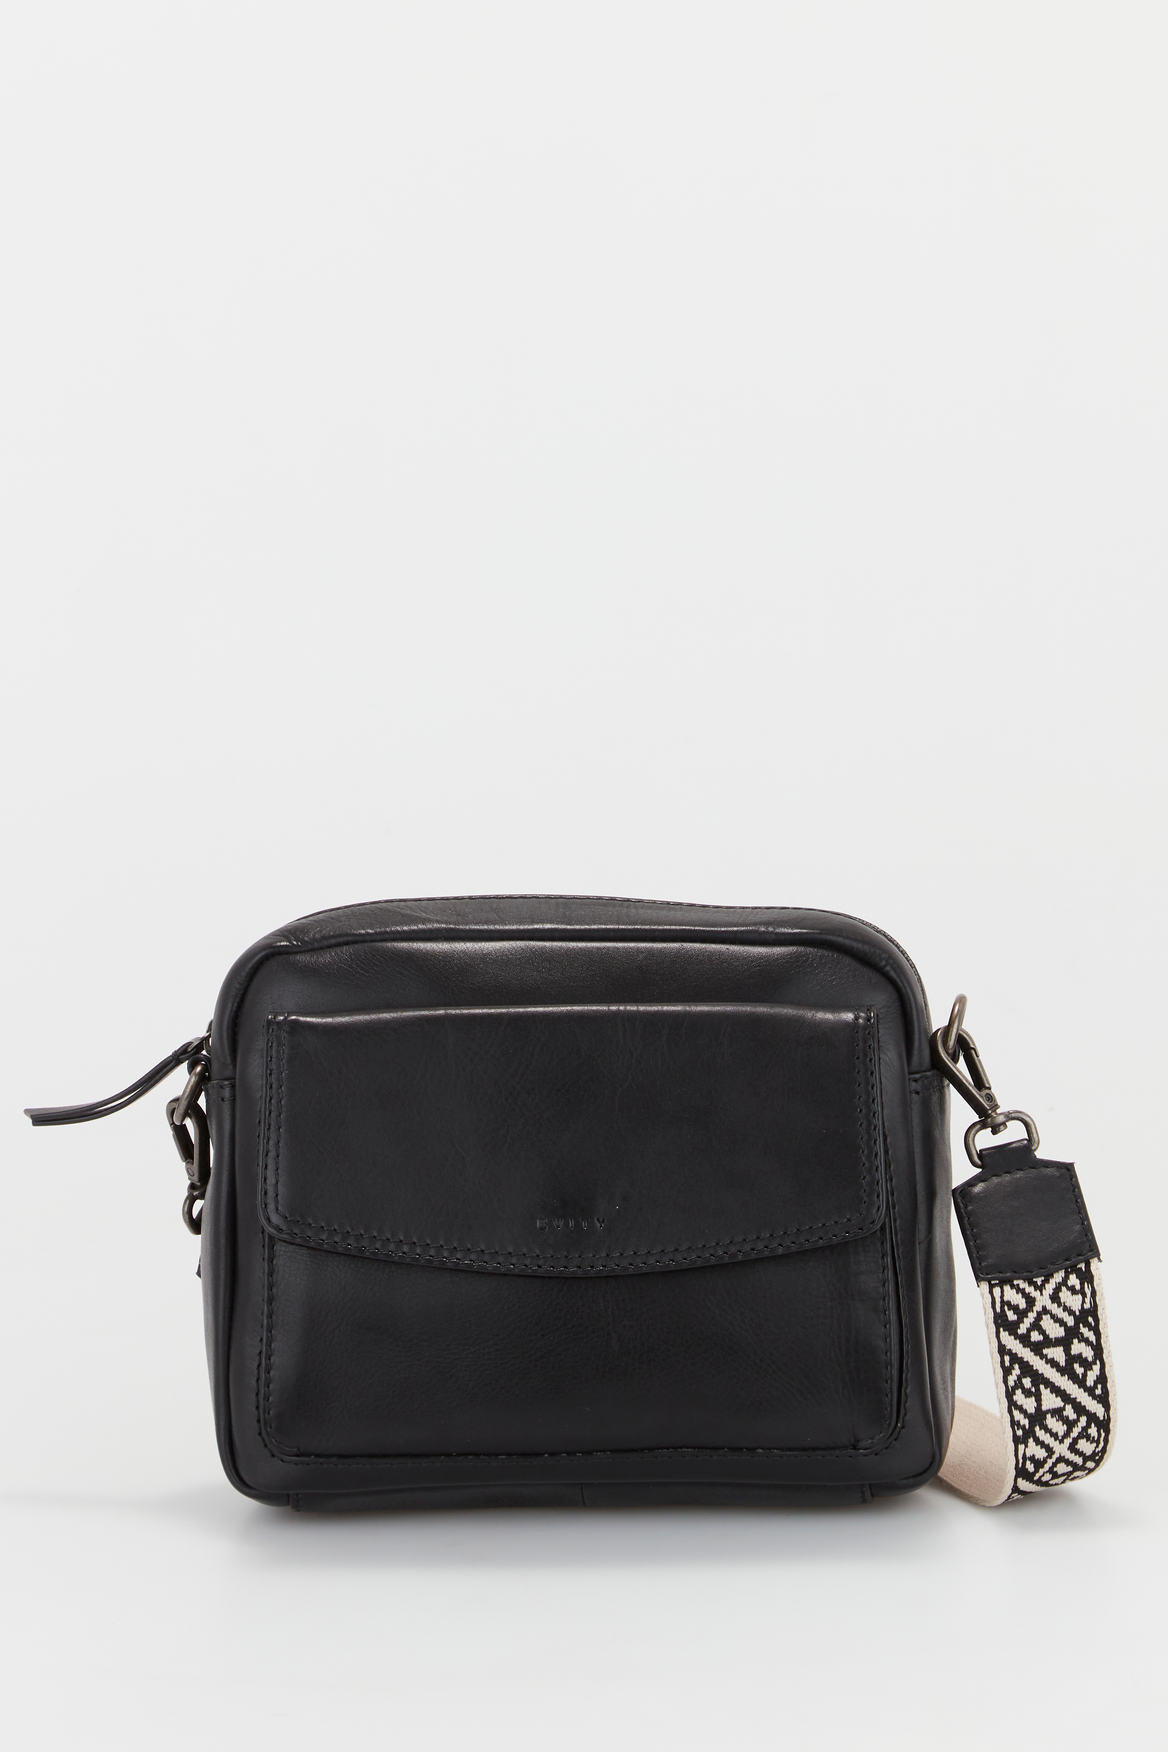 zwei shoulder bag Pia PI160 Black | Buy bags, purses & accessories online |  modeherz